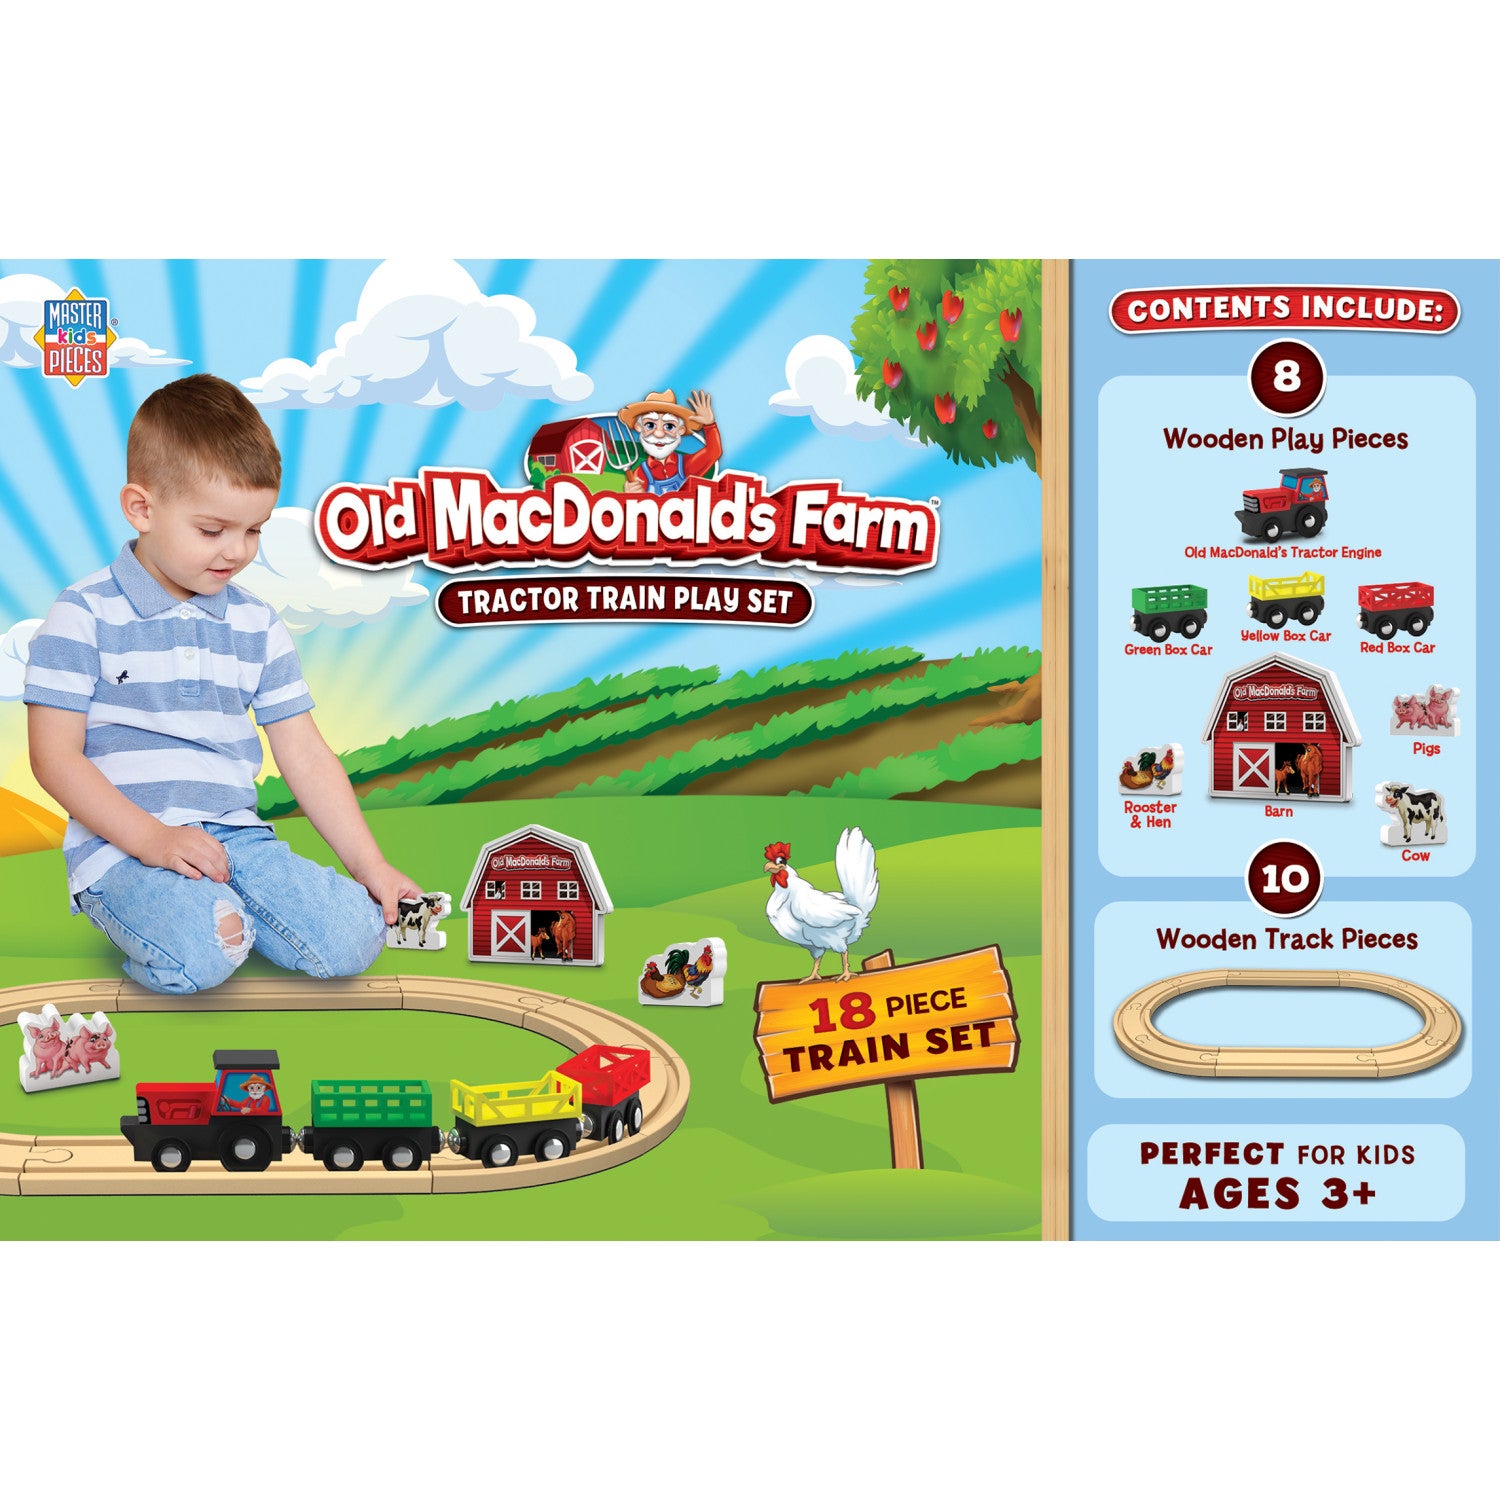 Old MacDonald's Farm Tractor Train Play Set